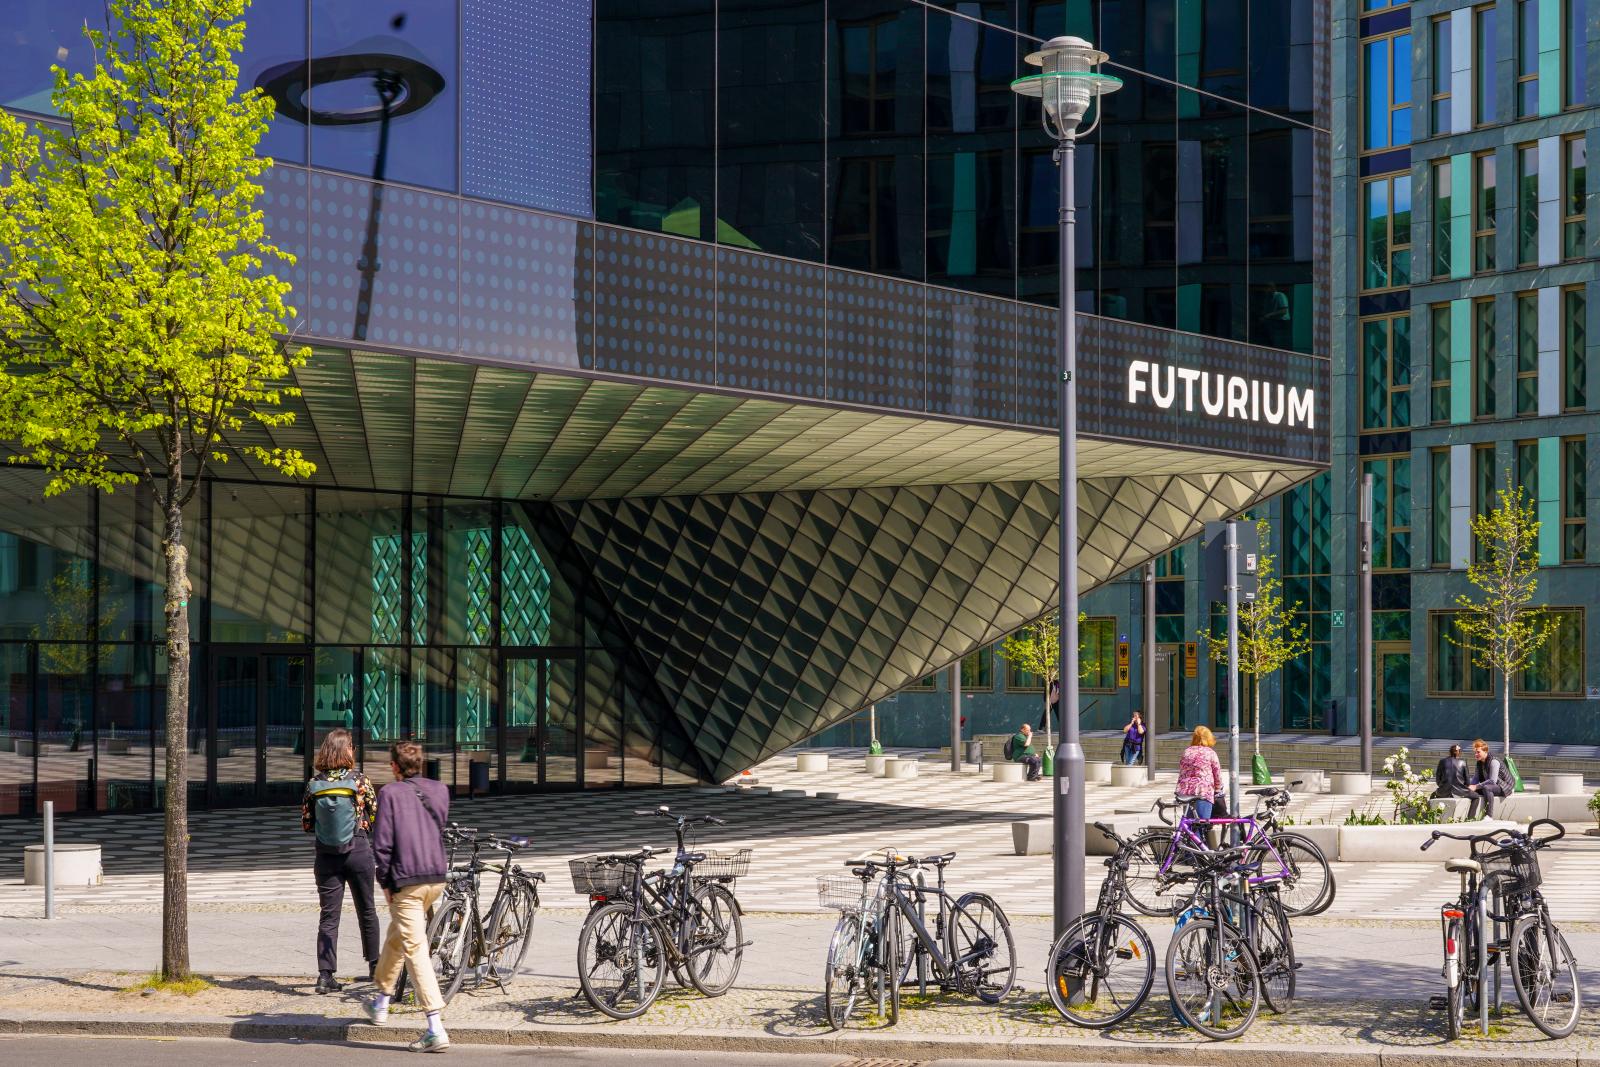 The Futurium in Berlin